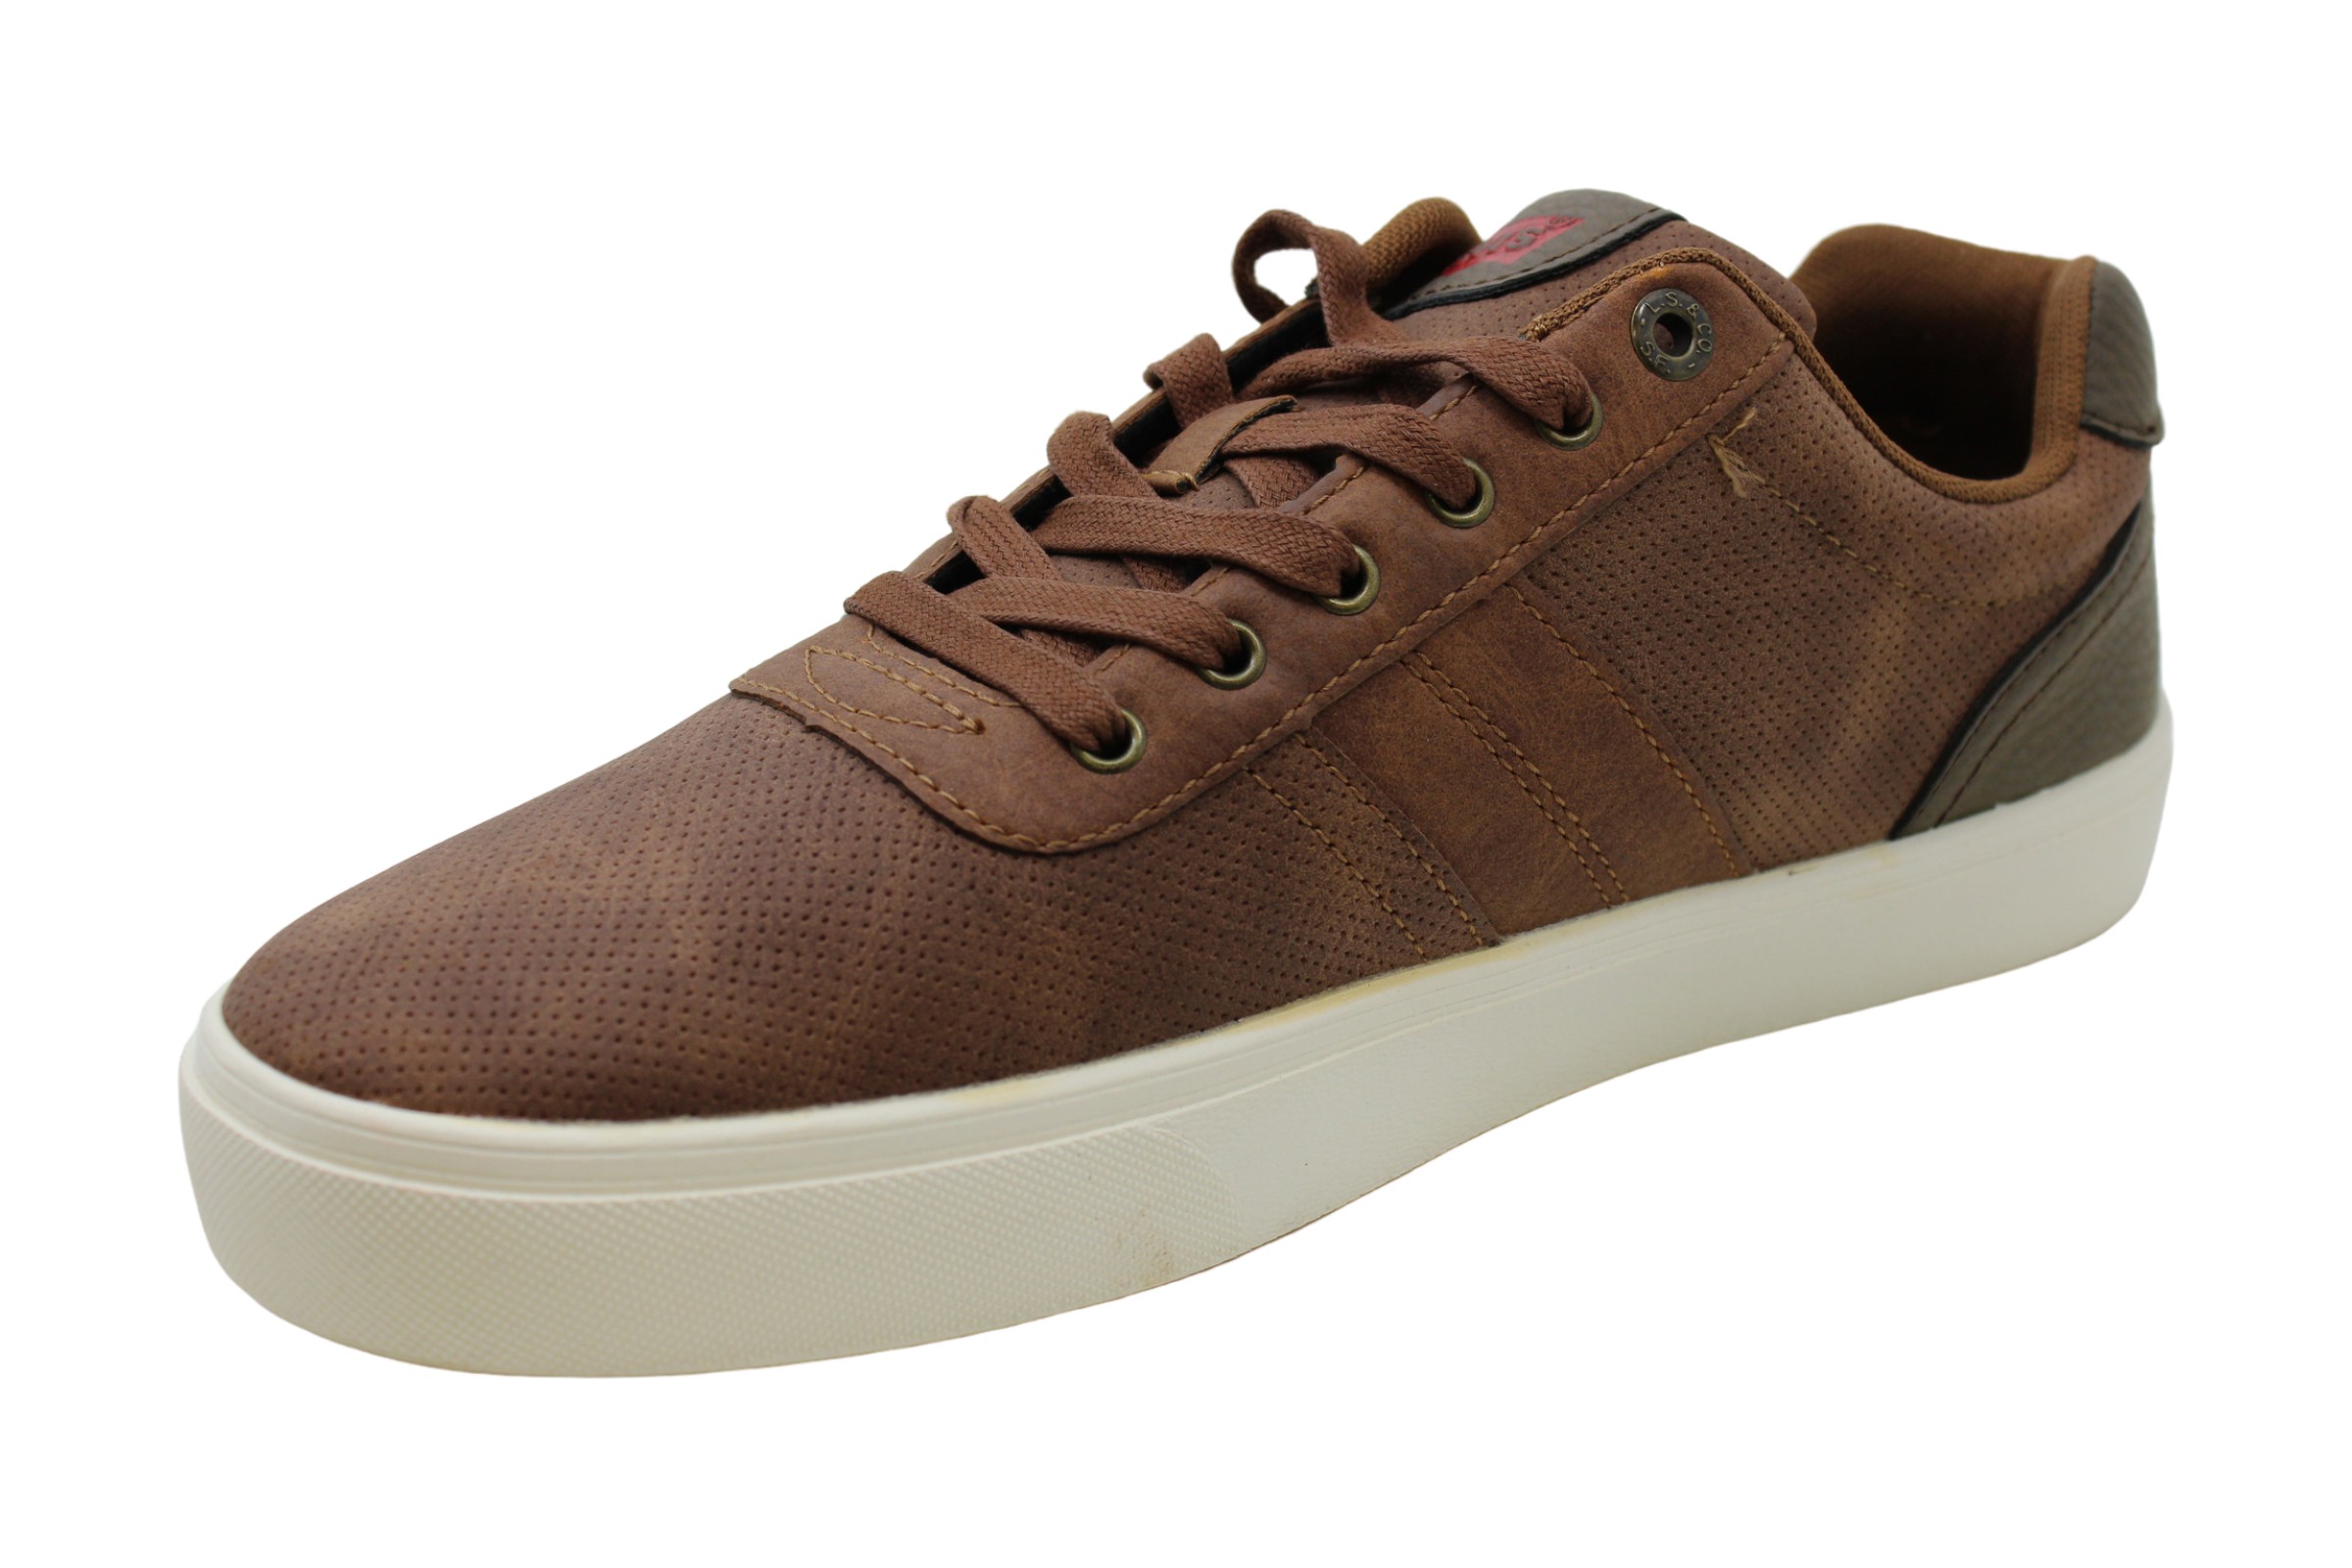 Levi's Men's Shoes 519221-u51 Low Top Lace Up Fashion Sneakers, Brown, Size 12.0 | eBay